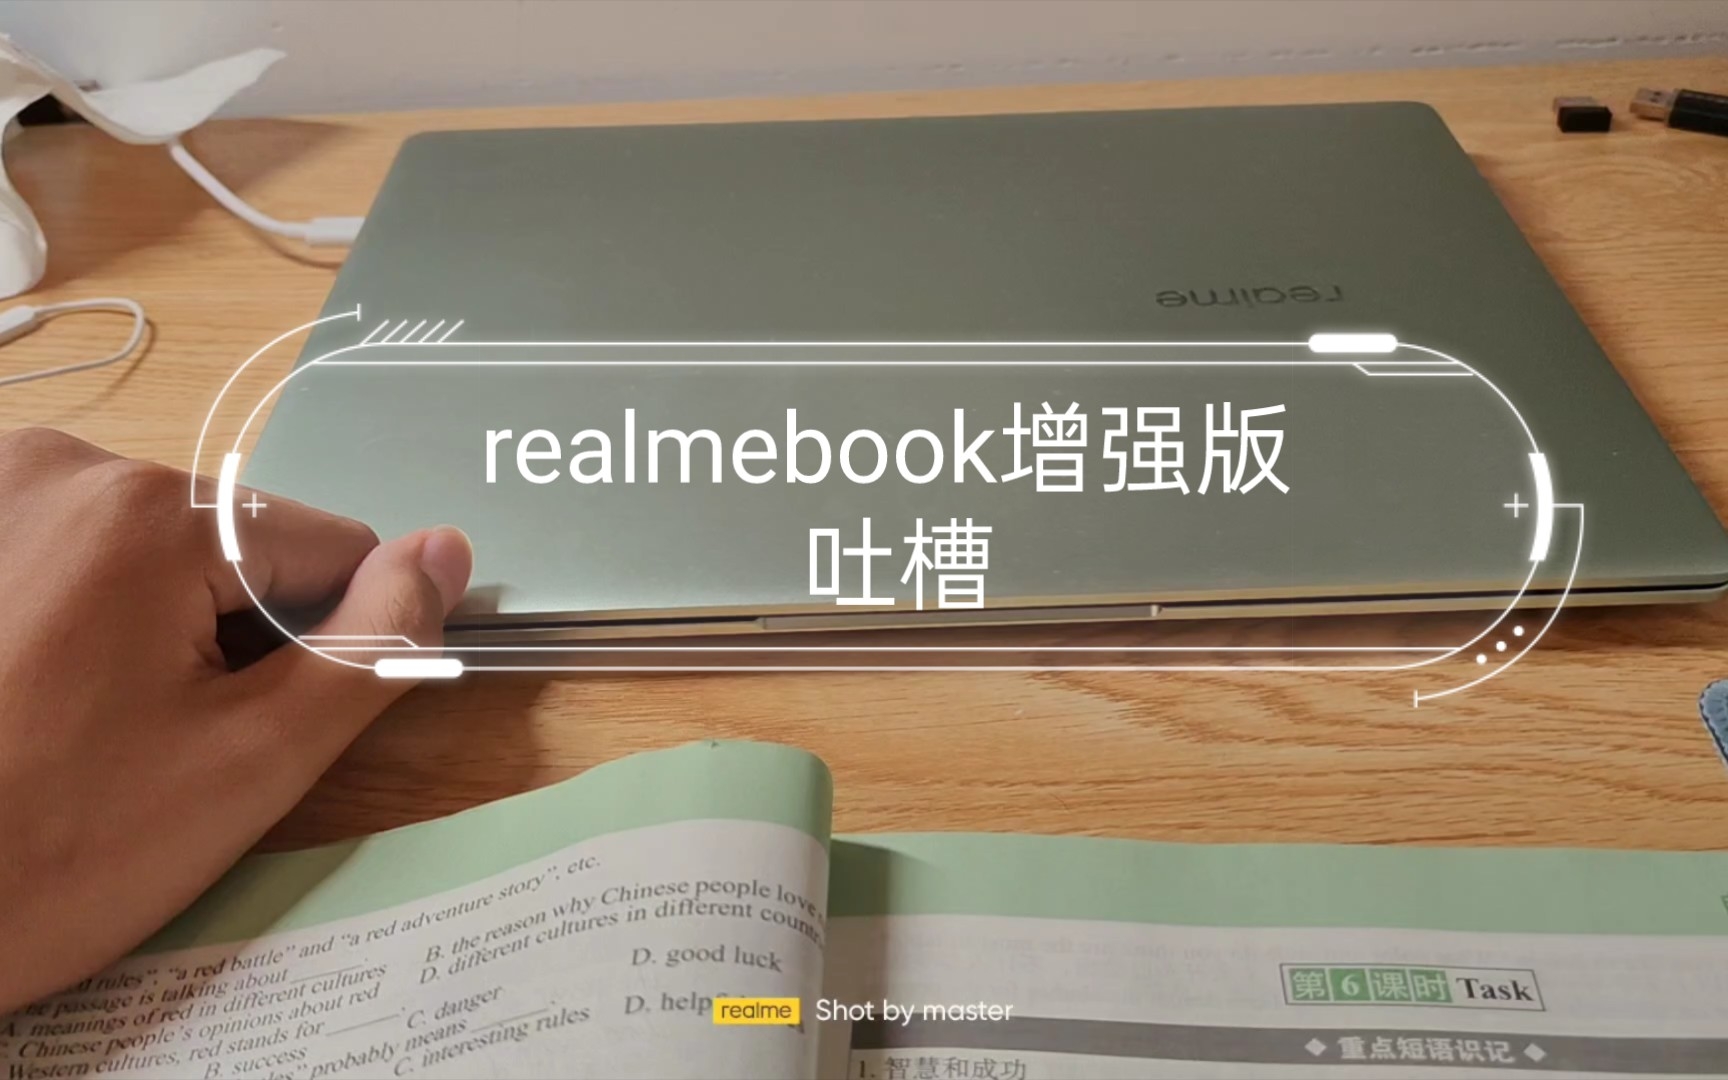 realmebook增强版 吐槽